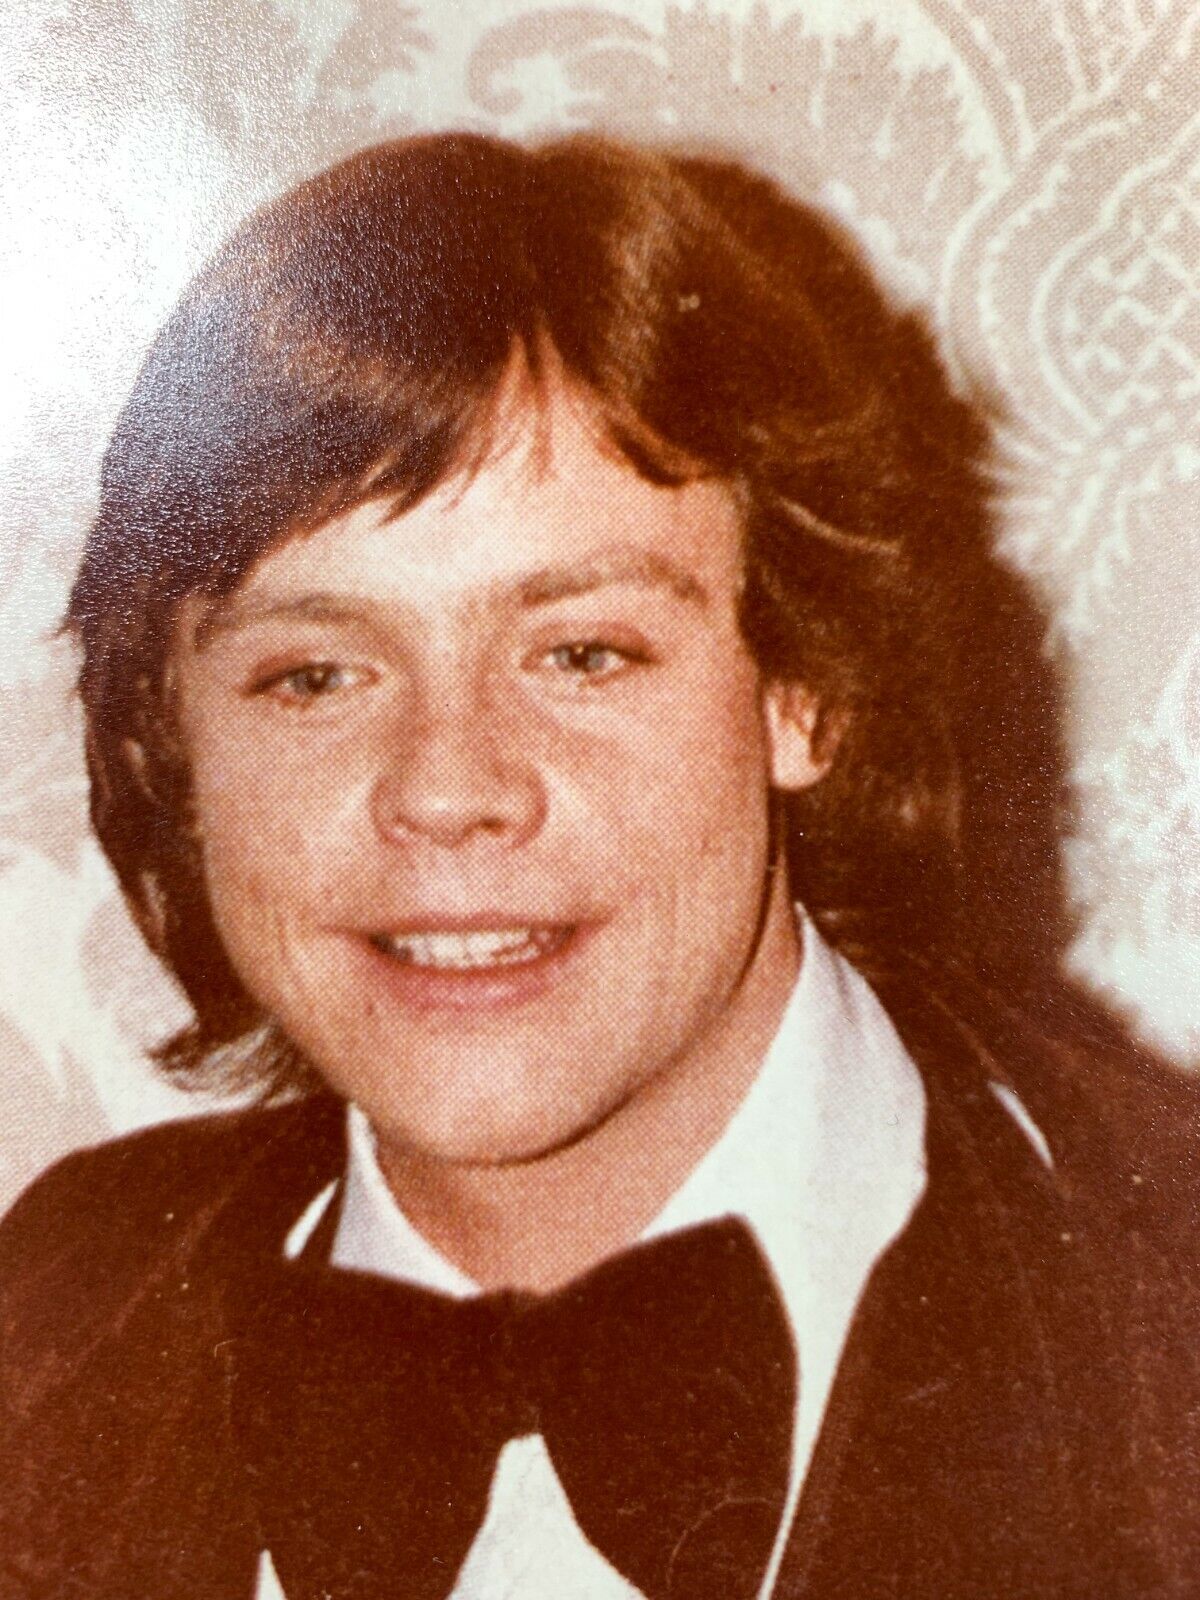 AhD) Photograph Mark Hamill Vintage Luke Skywalker Star Wars Tuxedo Big Tie